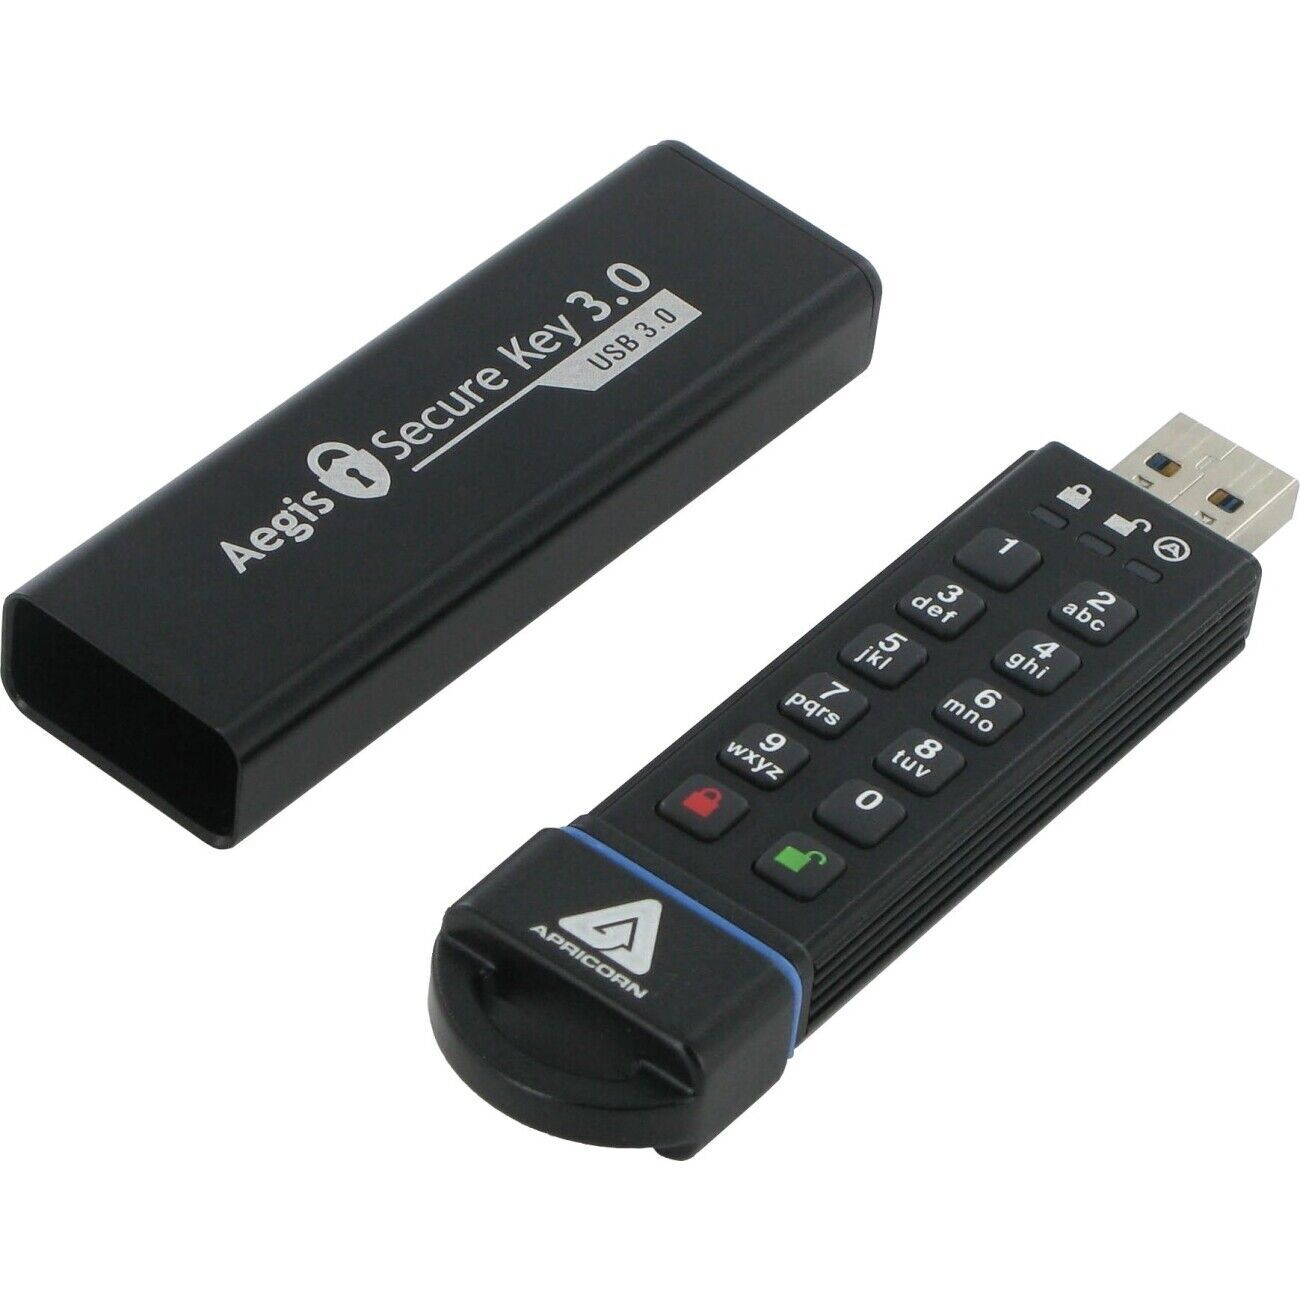 NEW SEALED 30GB Apricorn Aegis Secure Key USB3.0 Flash Drive - Black